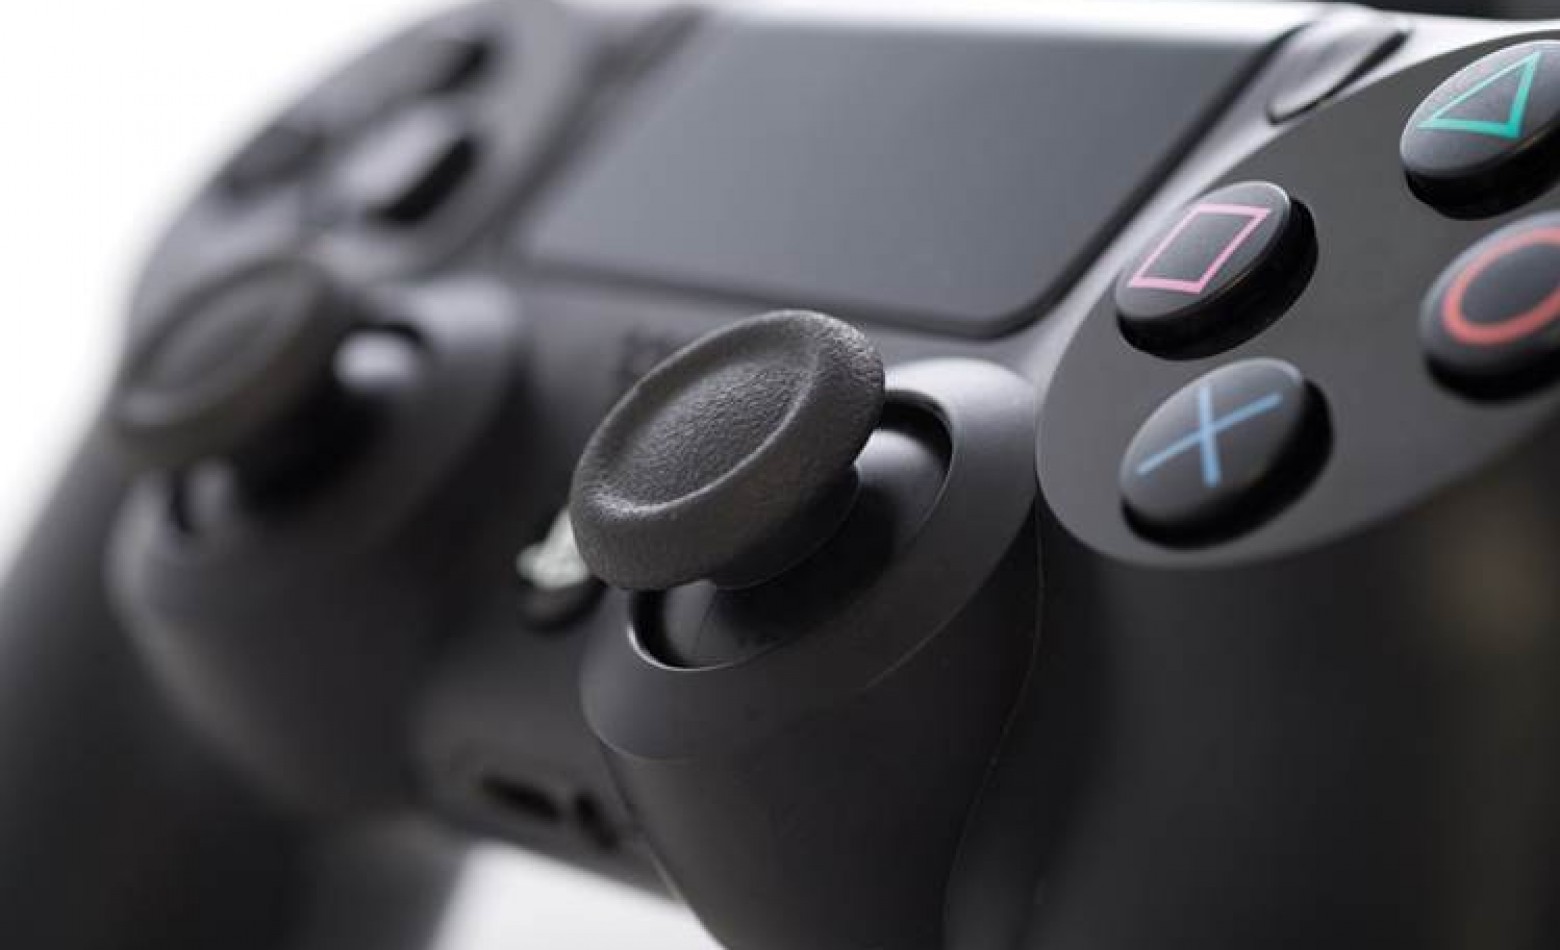 Sony também quer liberar jogos no sistema Early Access